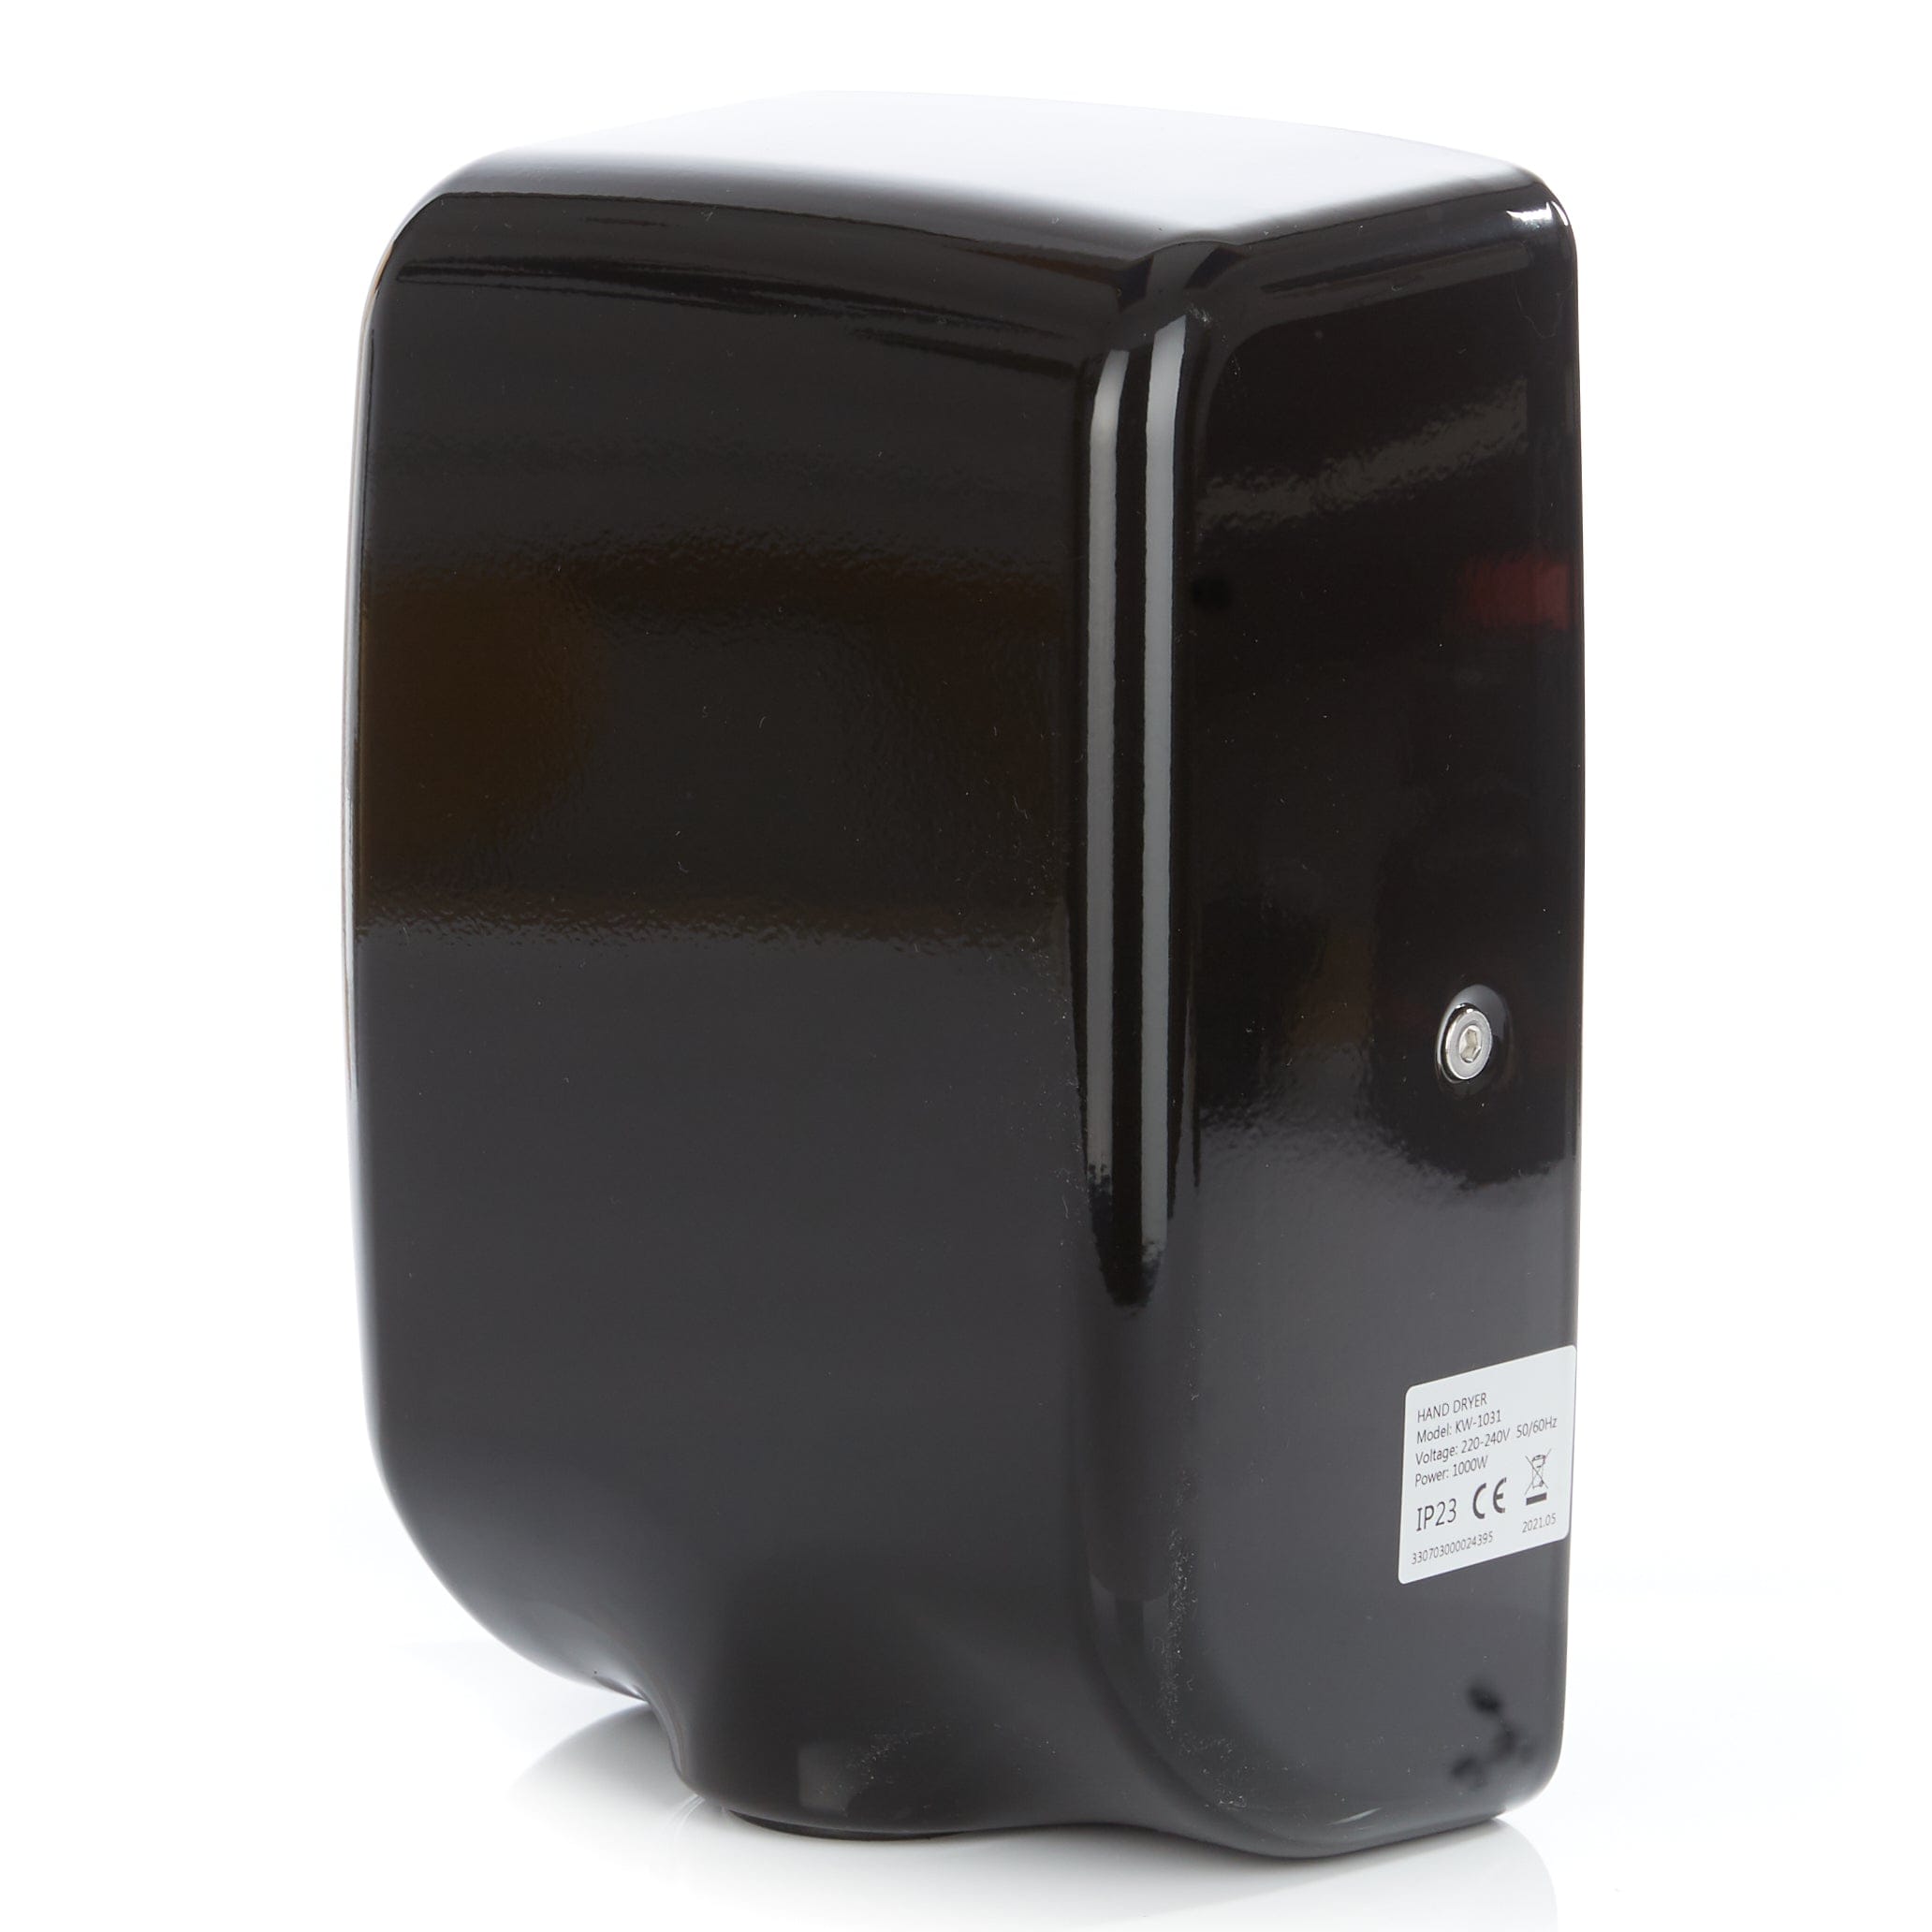 SupaDry Jet Hand Dryer in Gloss Black